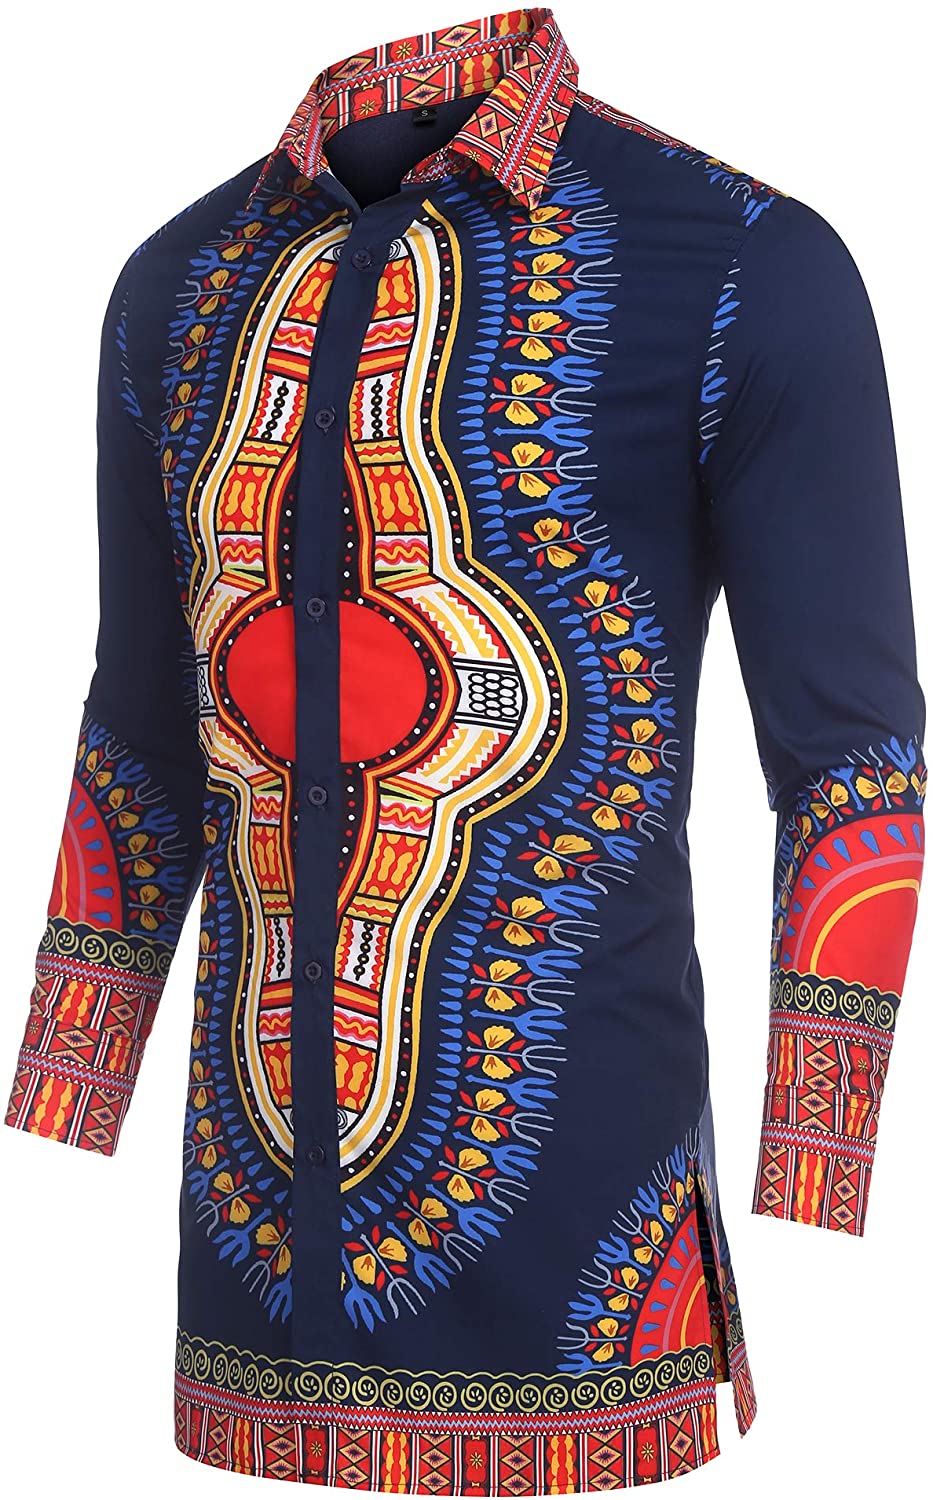 URRU Men's Long Sleeve African Shirt Dashiki Printed Button Down Shirts ...